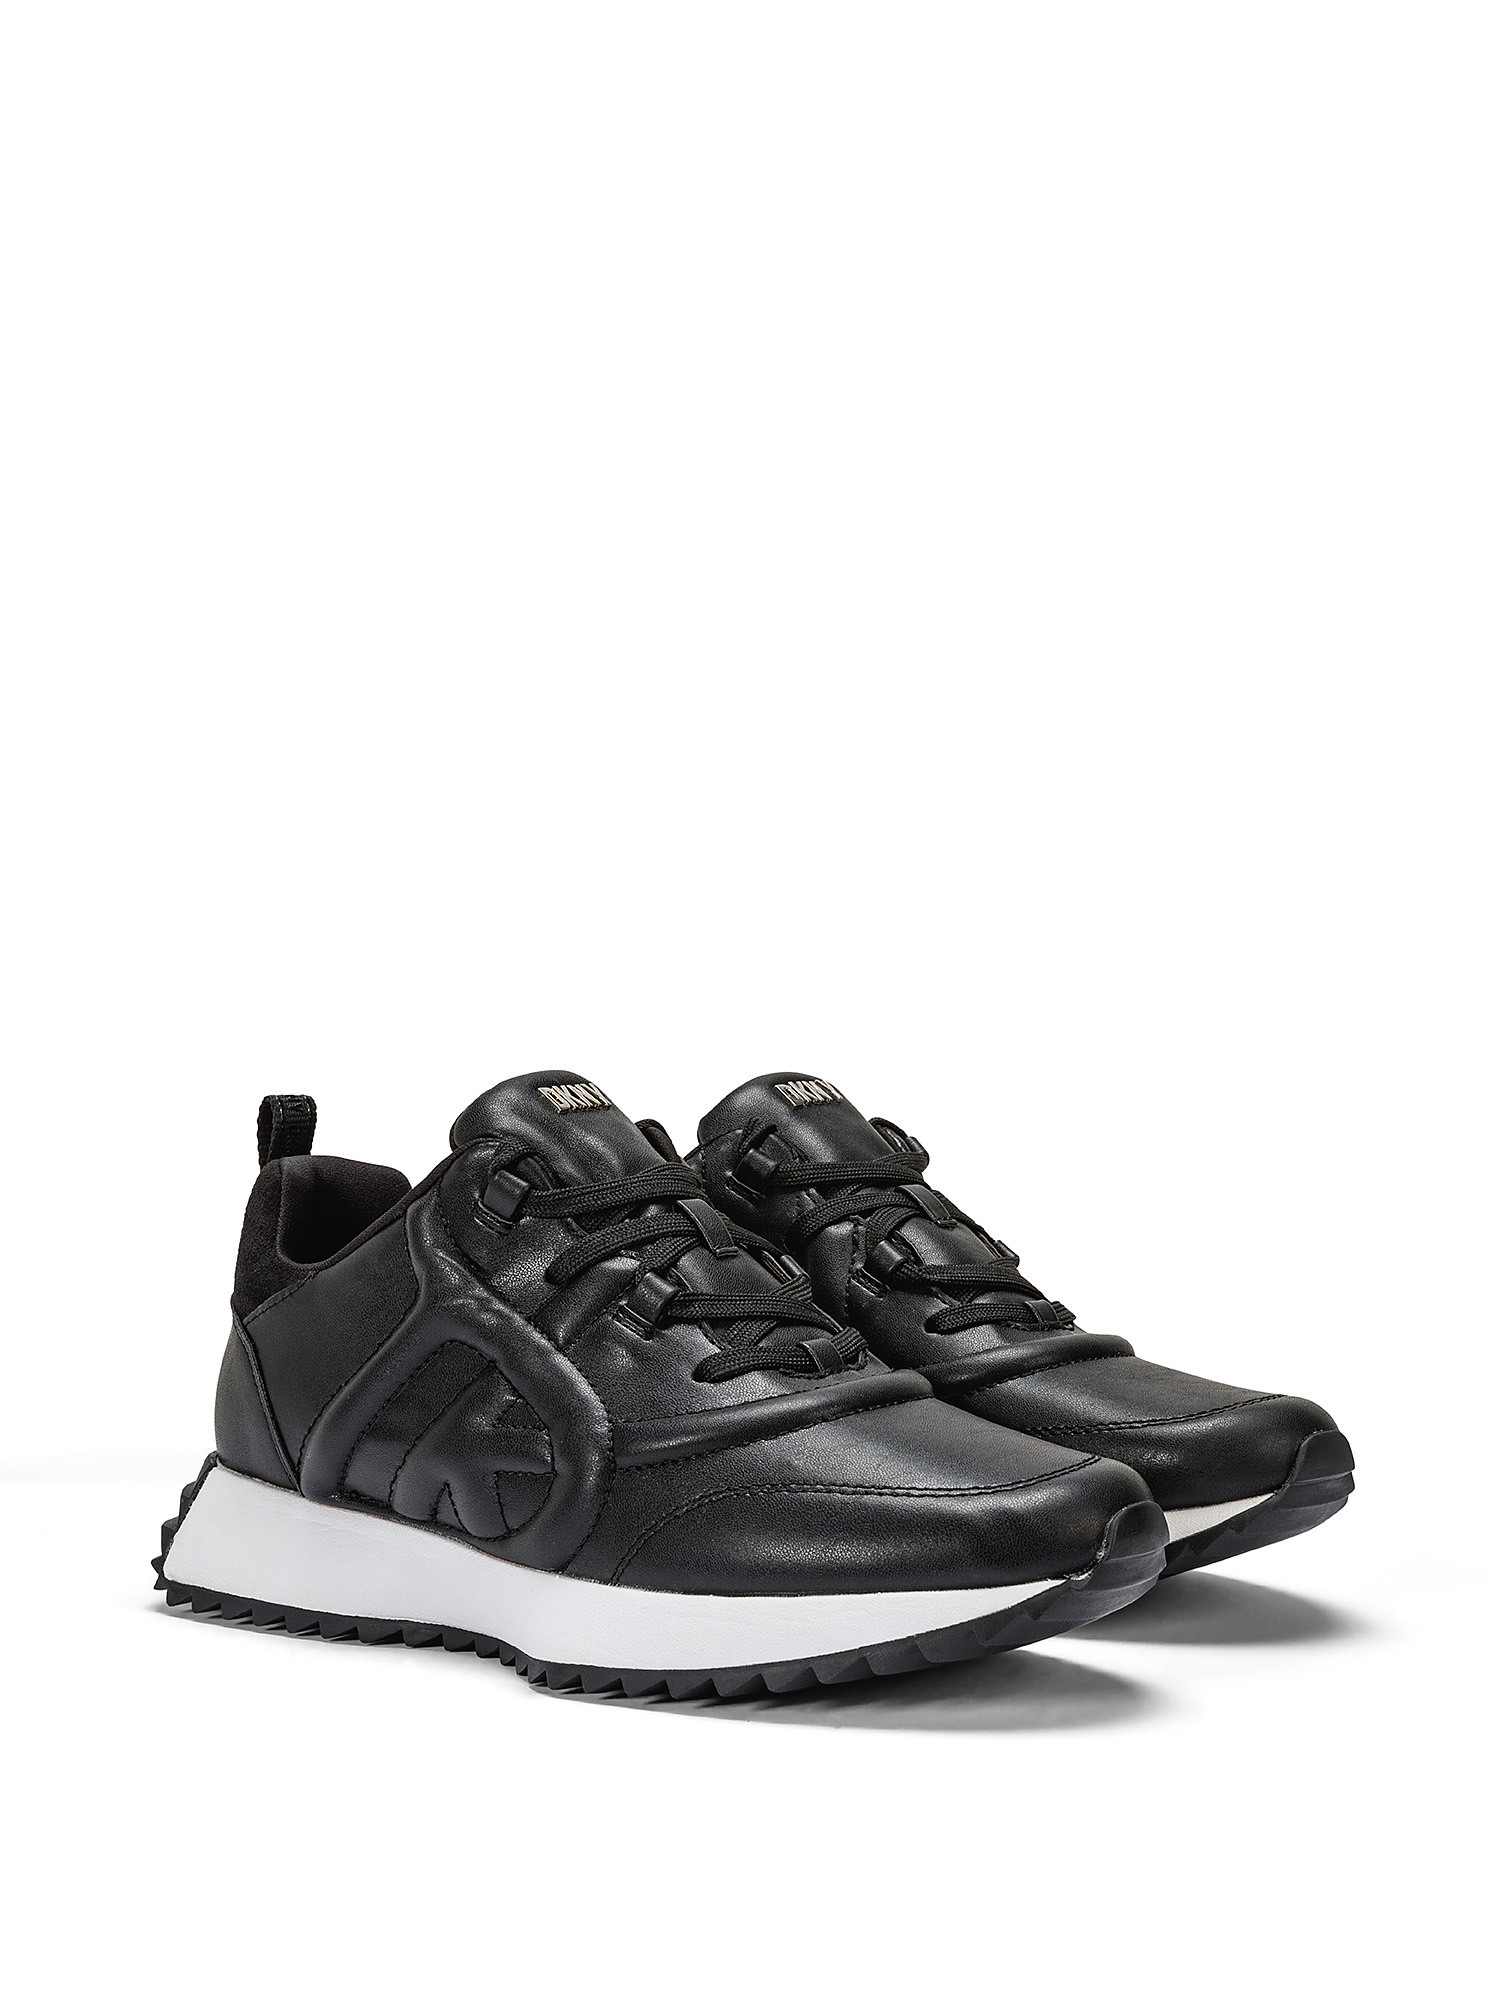 DKNY - Sneakers NIX, Nero, large image number 1